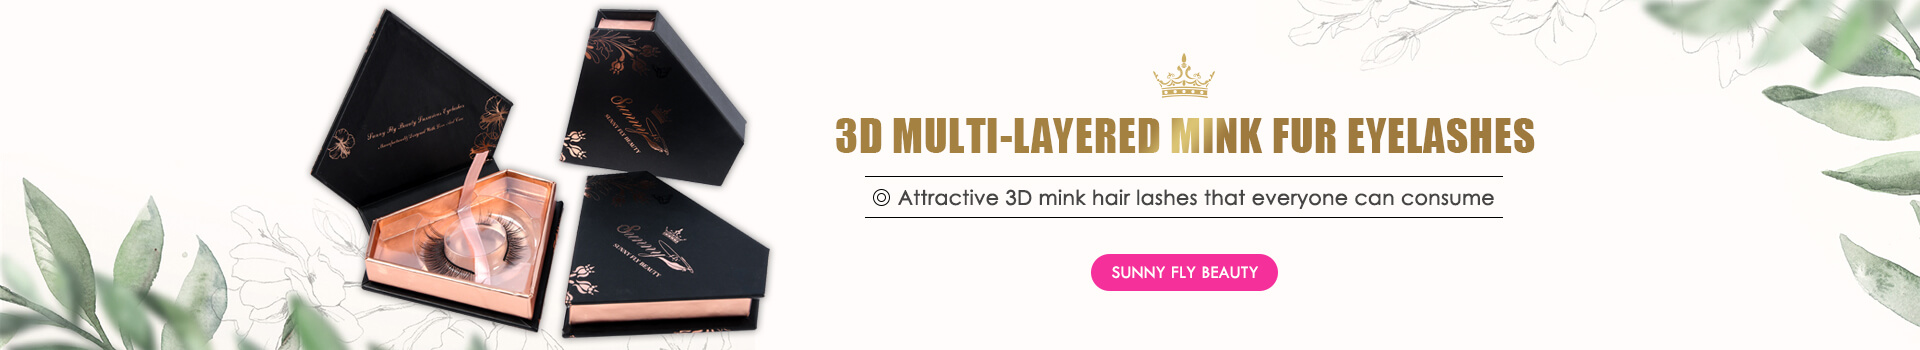 3D Multi-layered Mink Fur Eyelashes MG02